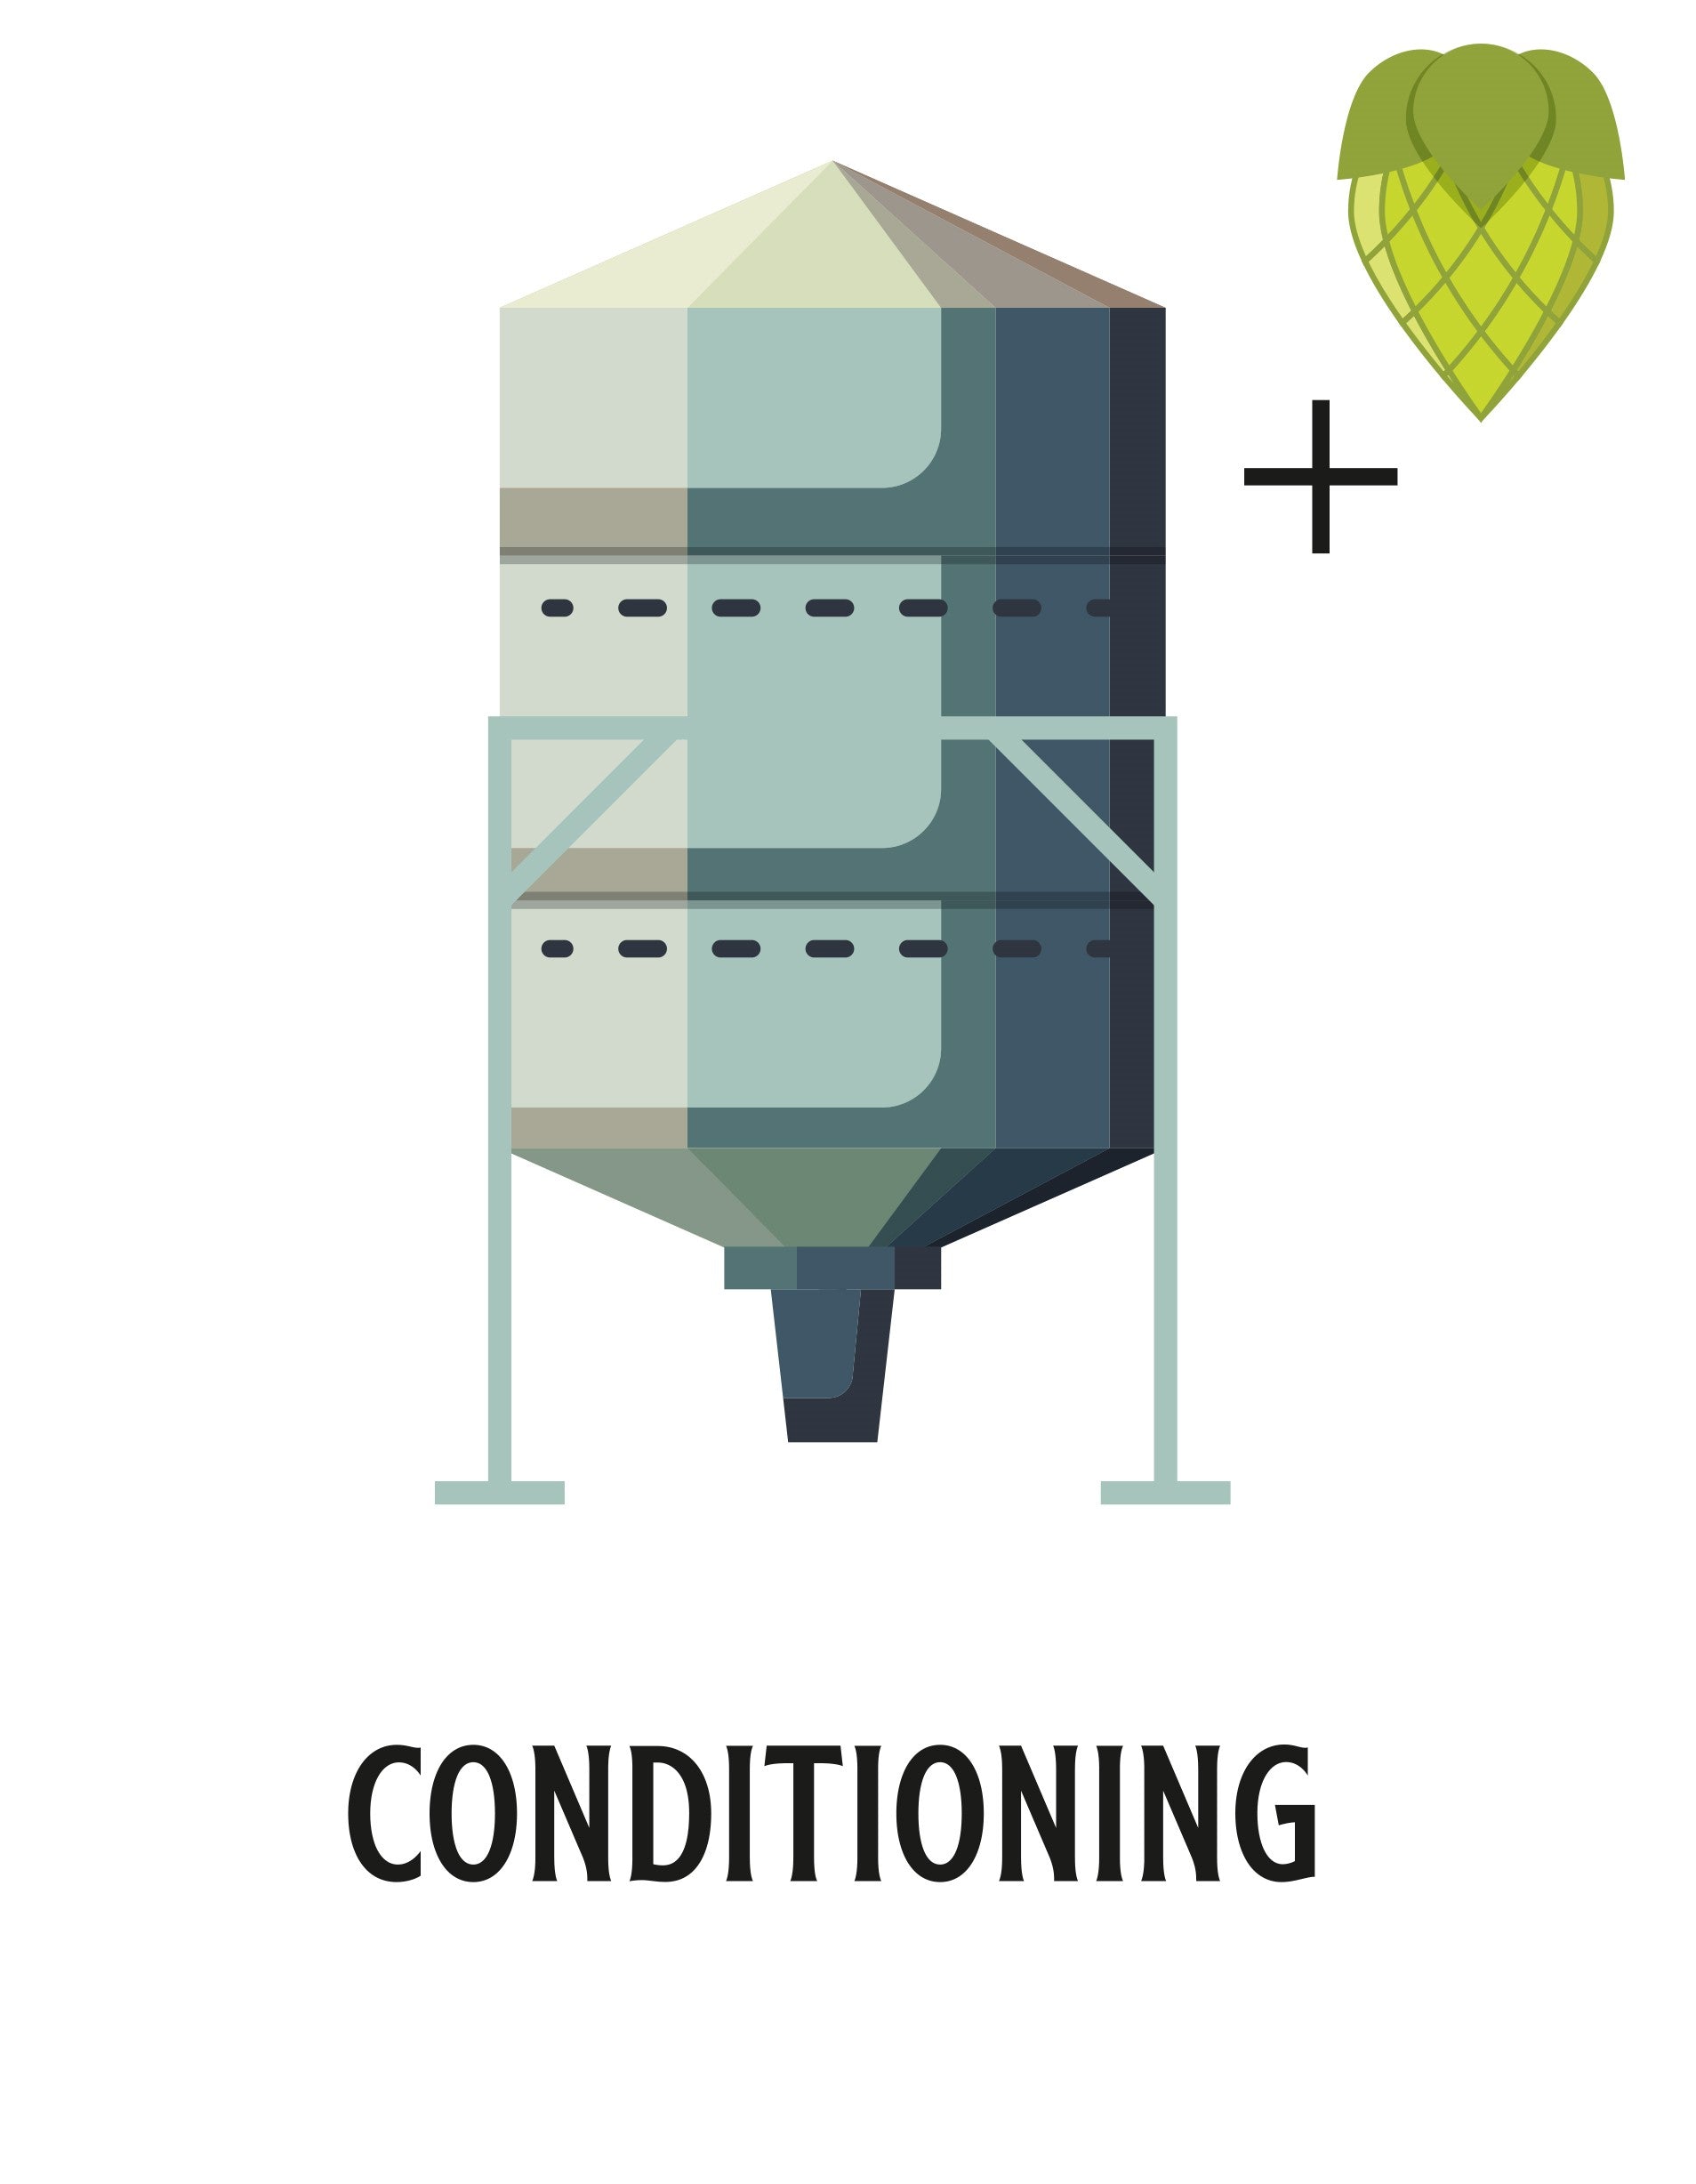 Conditioning vessel